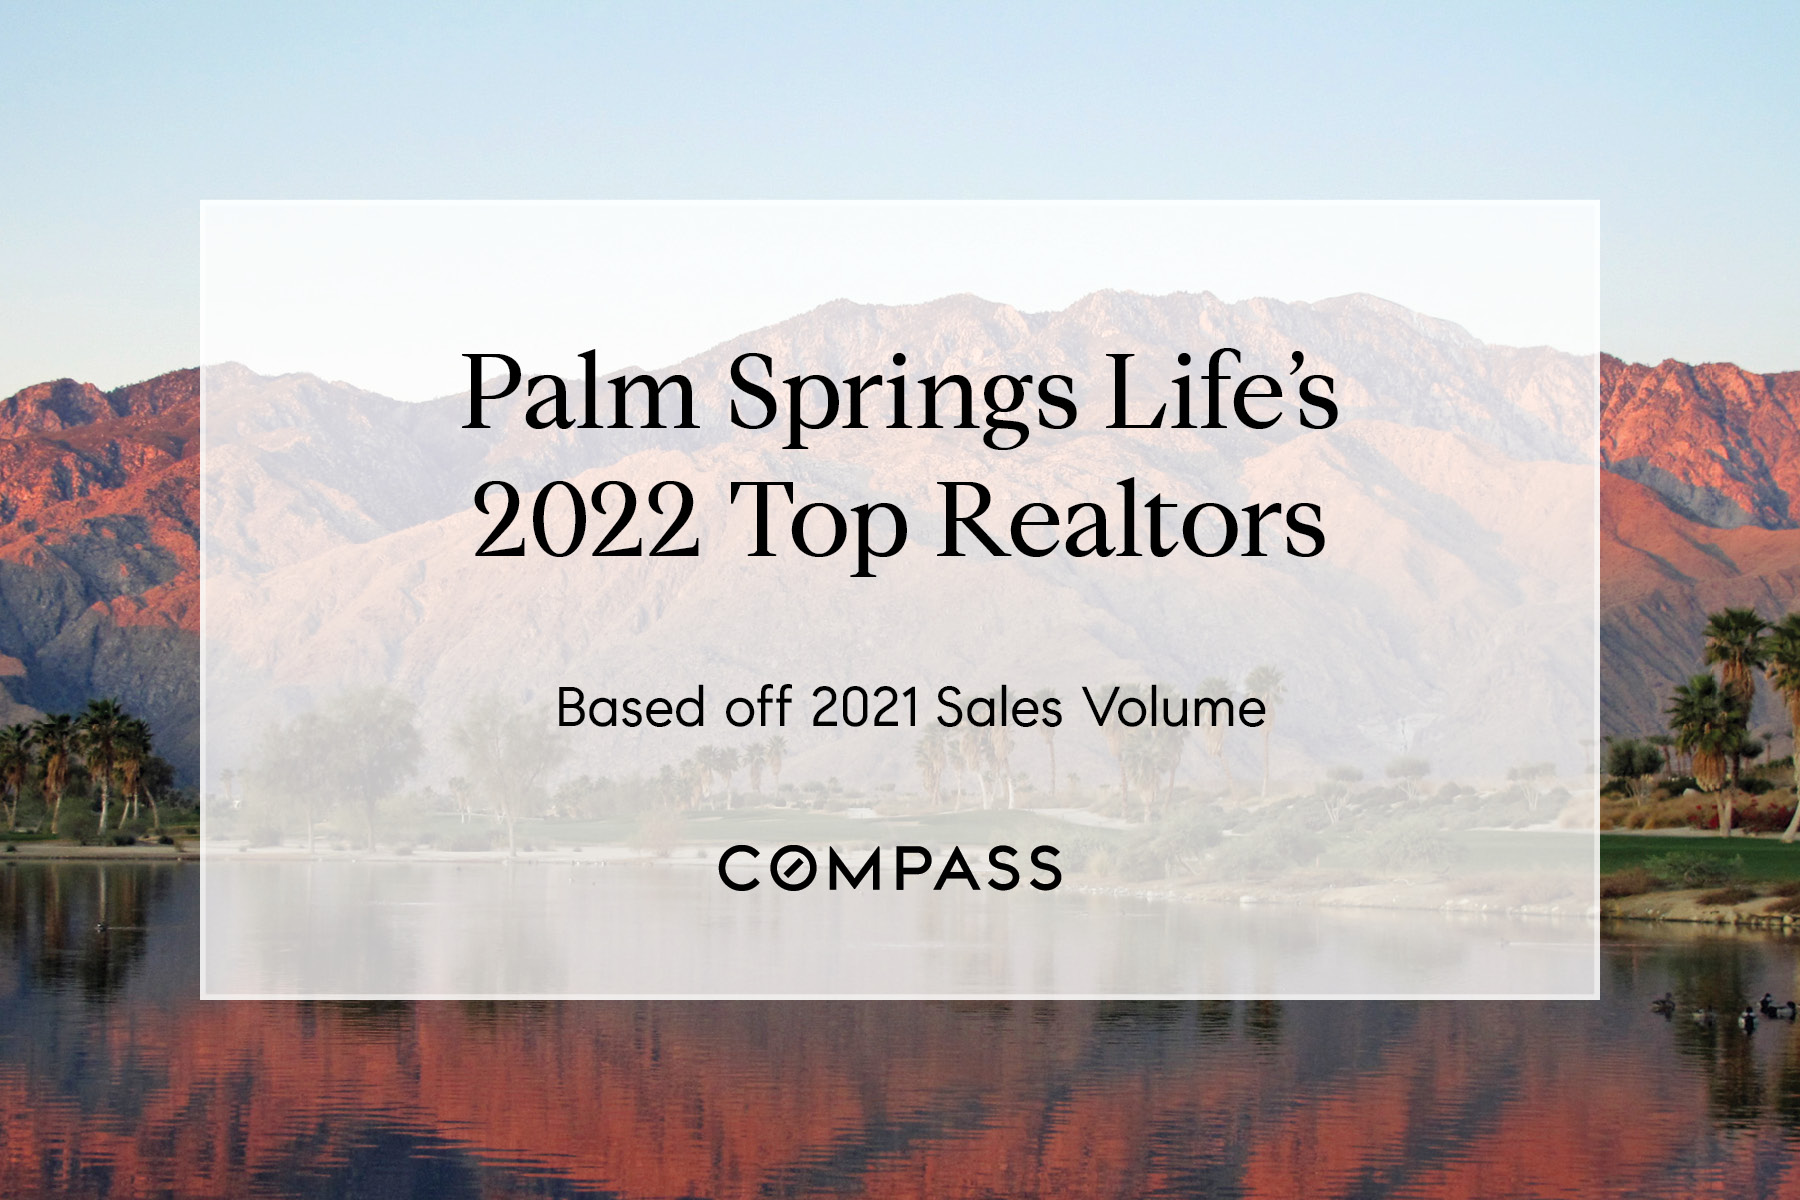 Palm Springs Life’s 2022 Top Realtor Report California Real Estate Blog